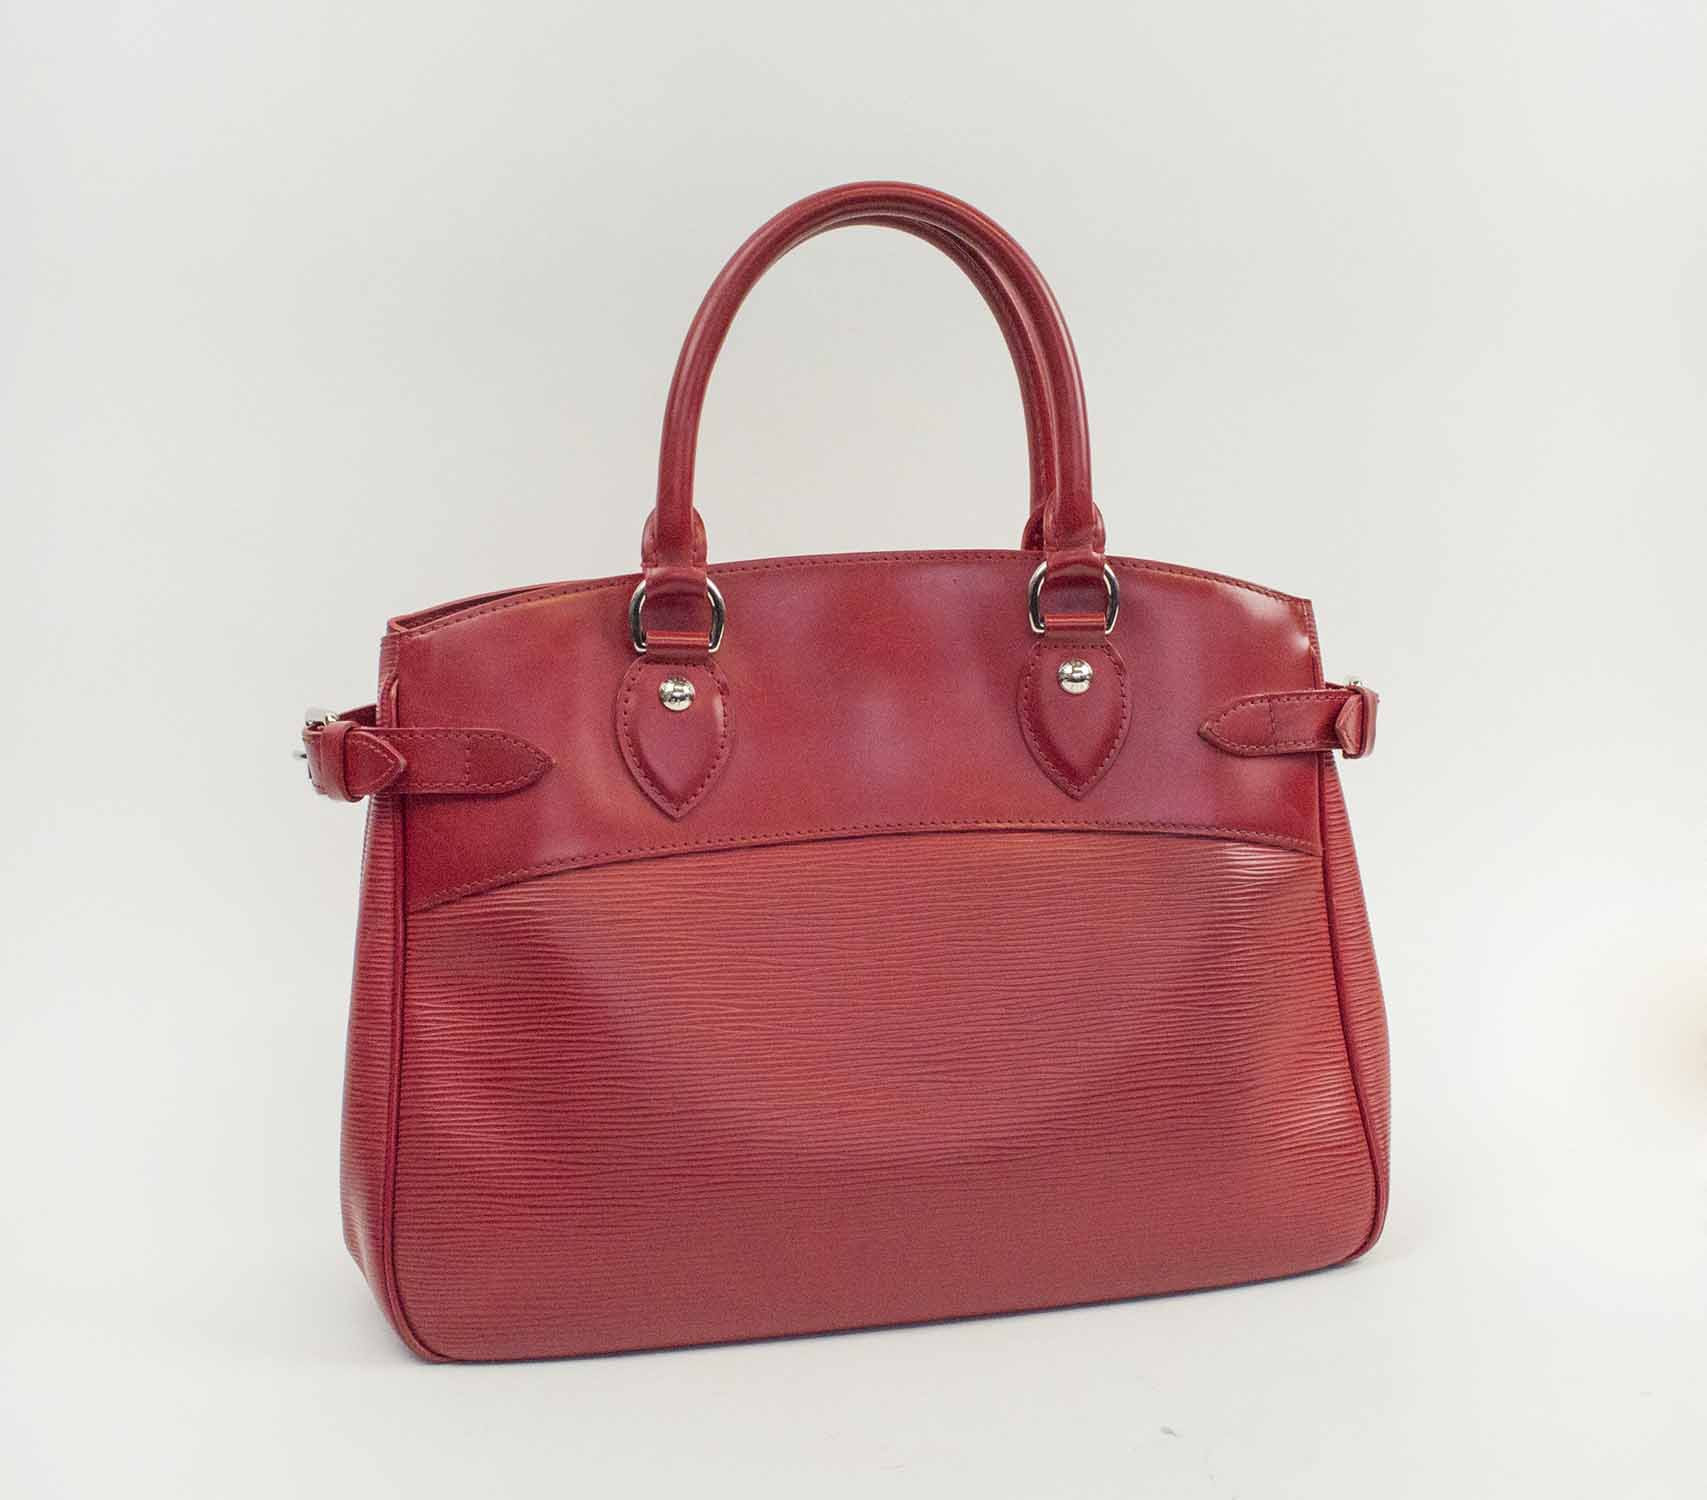 Sold at Auction: Louis Vuitton, LOUIS VUITTON belt, Epi leather in